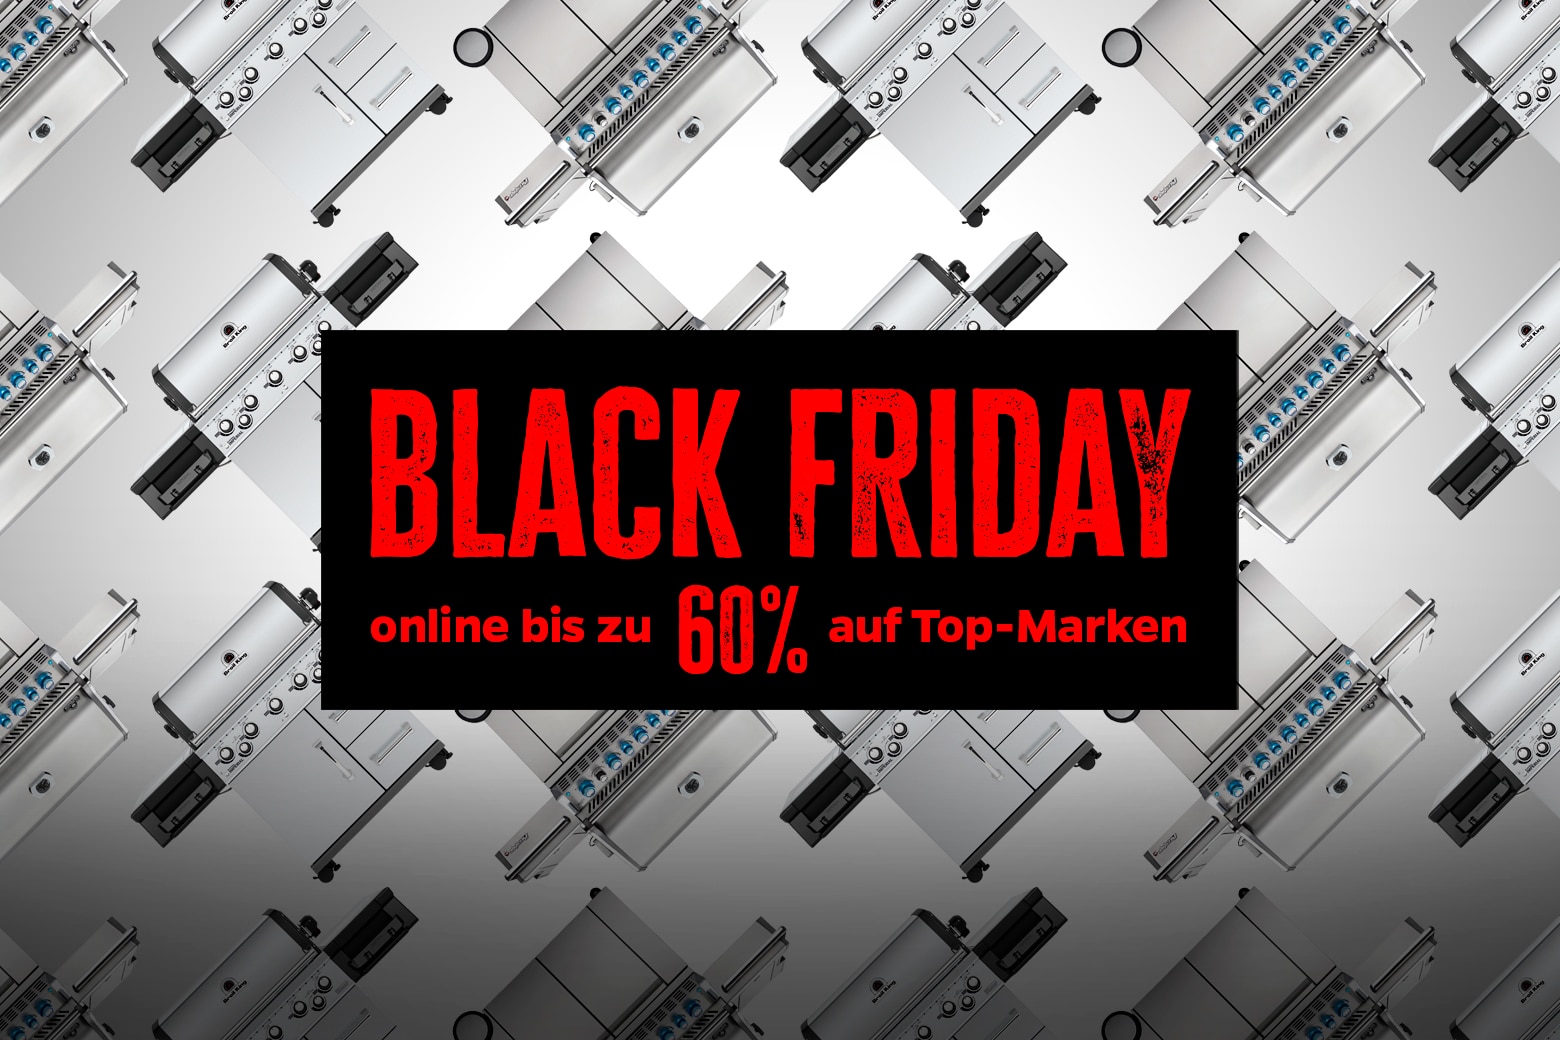 Grillfürst Black Friday Angebote in 2022